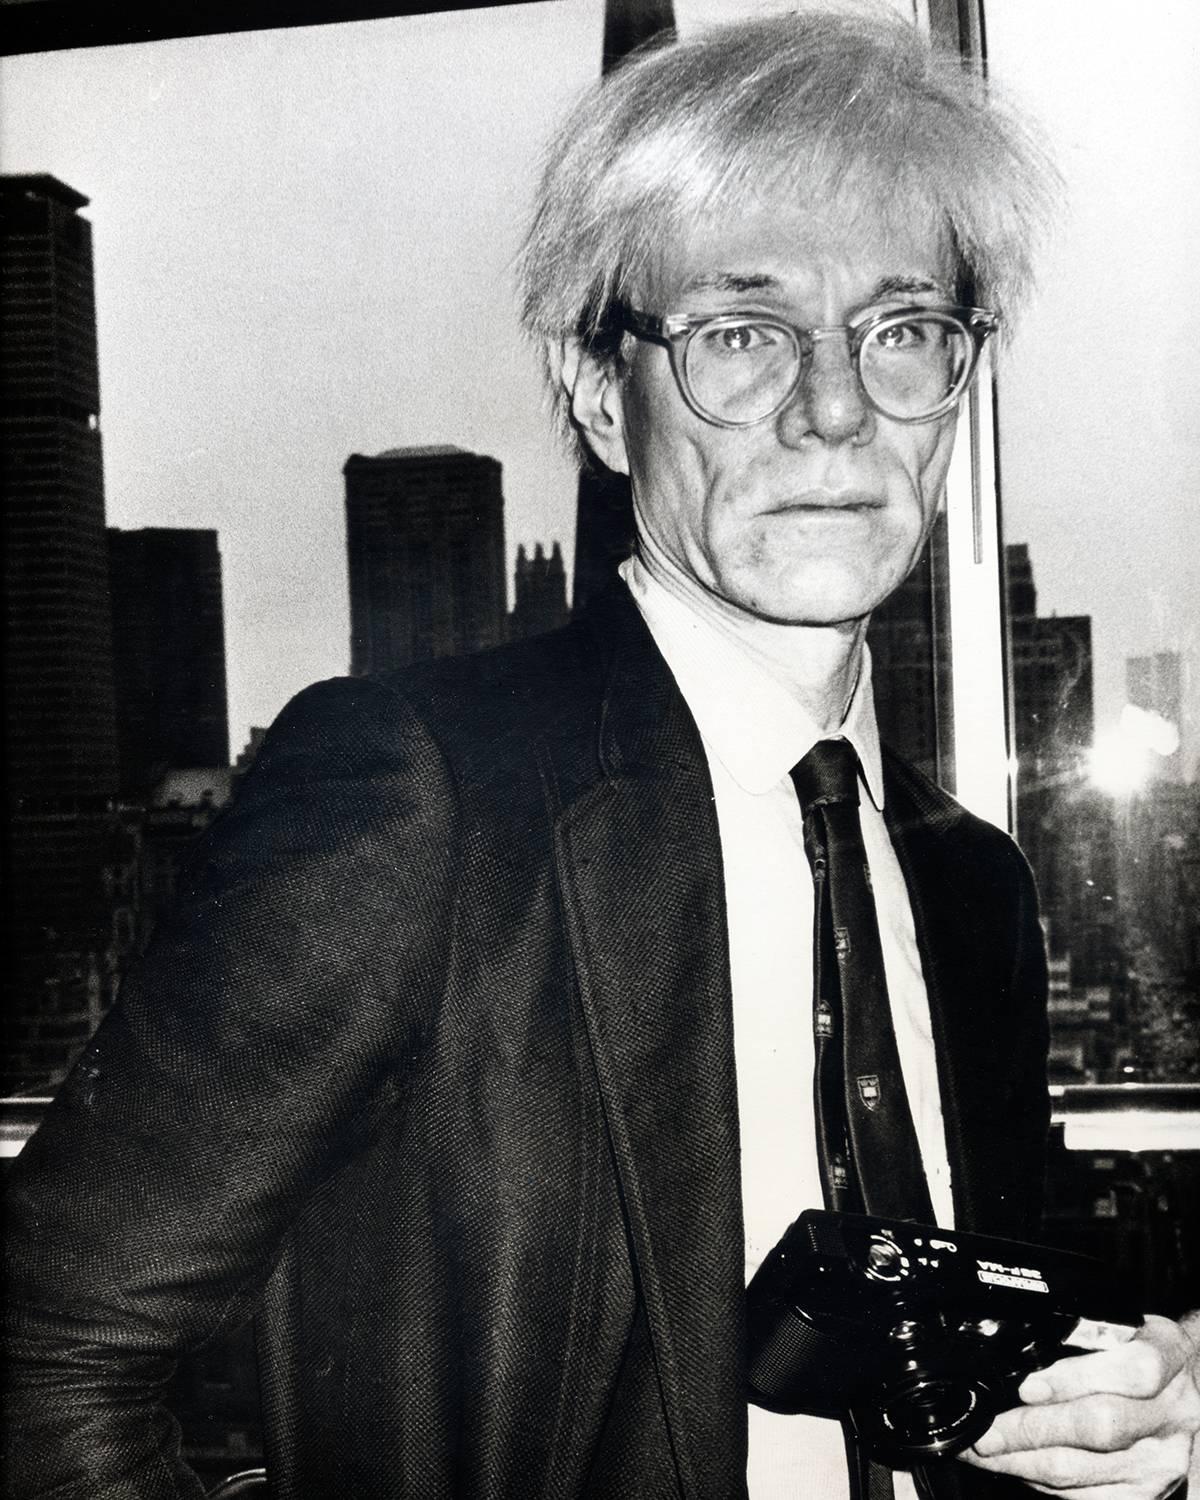 Fernando Natalici Black and White Photograph - Andy Warhol photo New York 1978